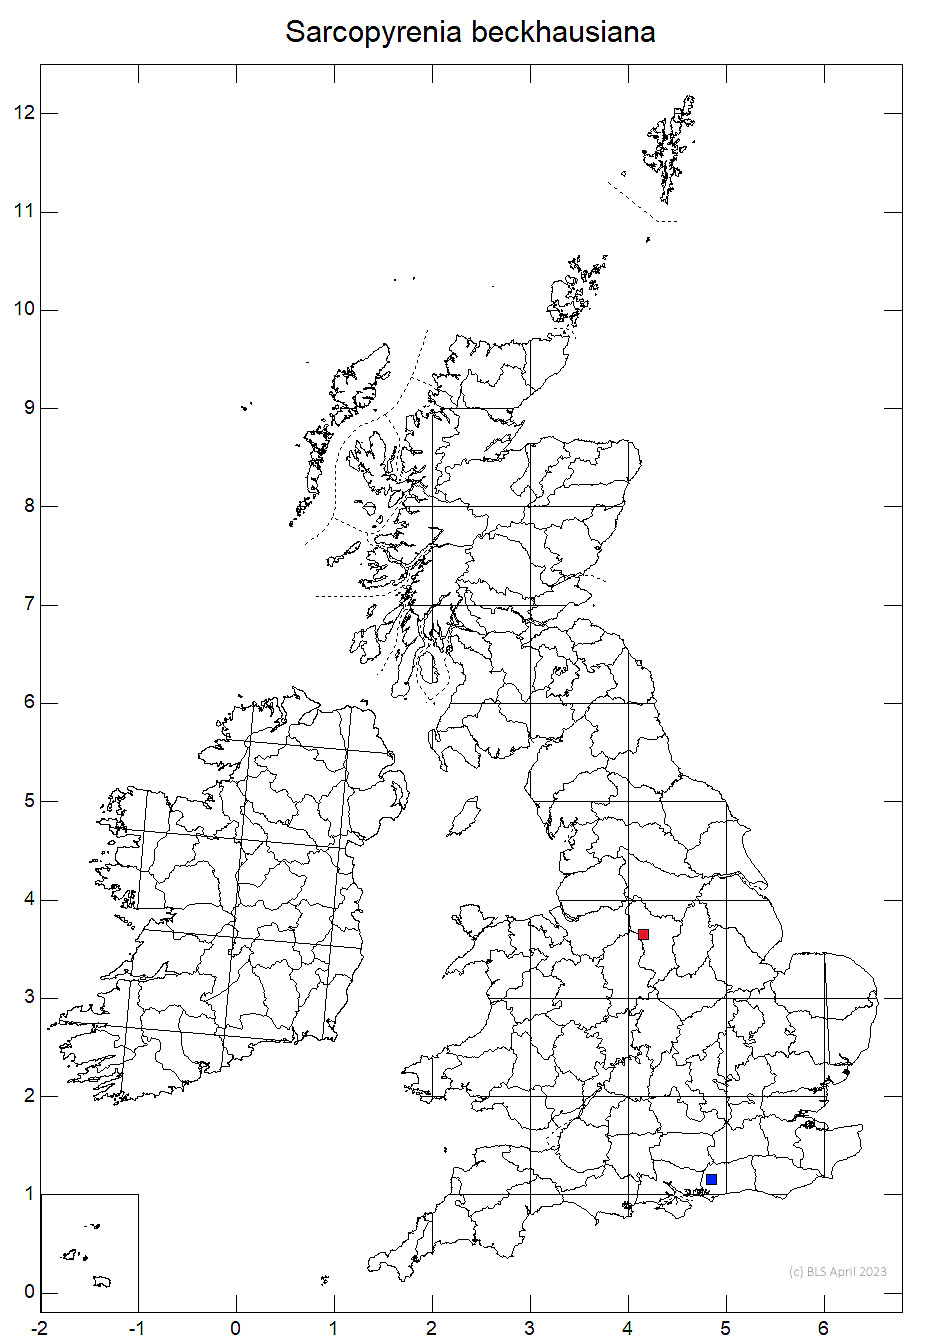 Sarcopyrenia beckhausiana 10km sq distribution map